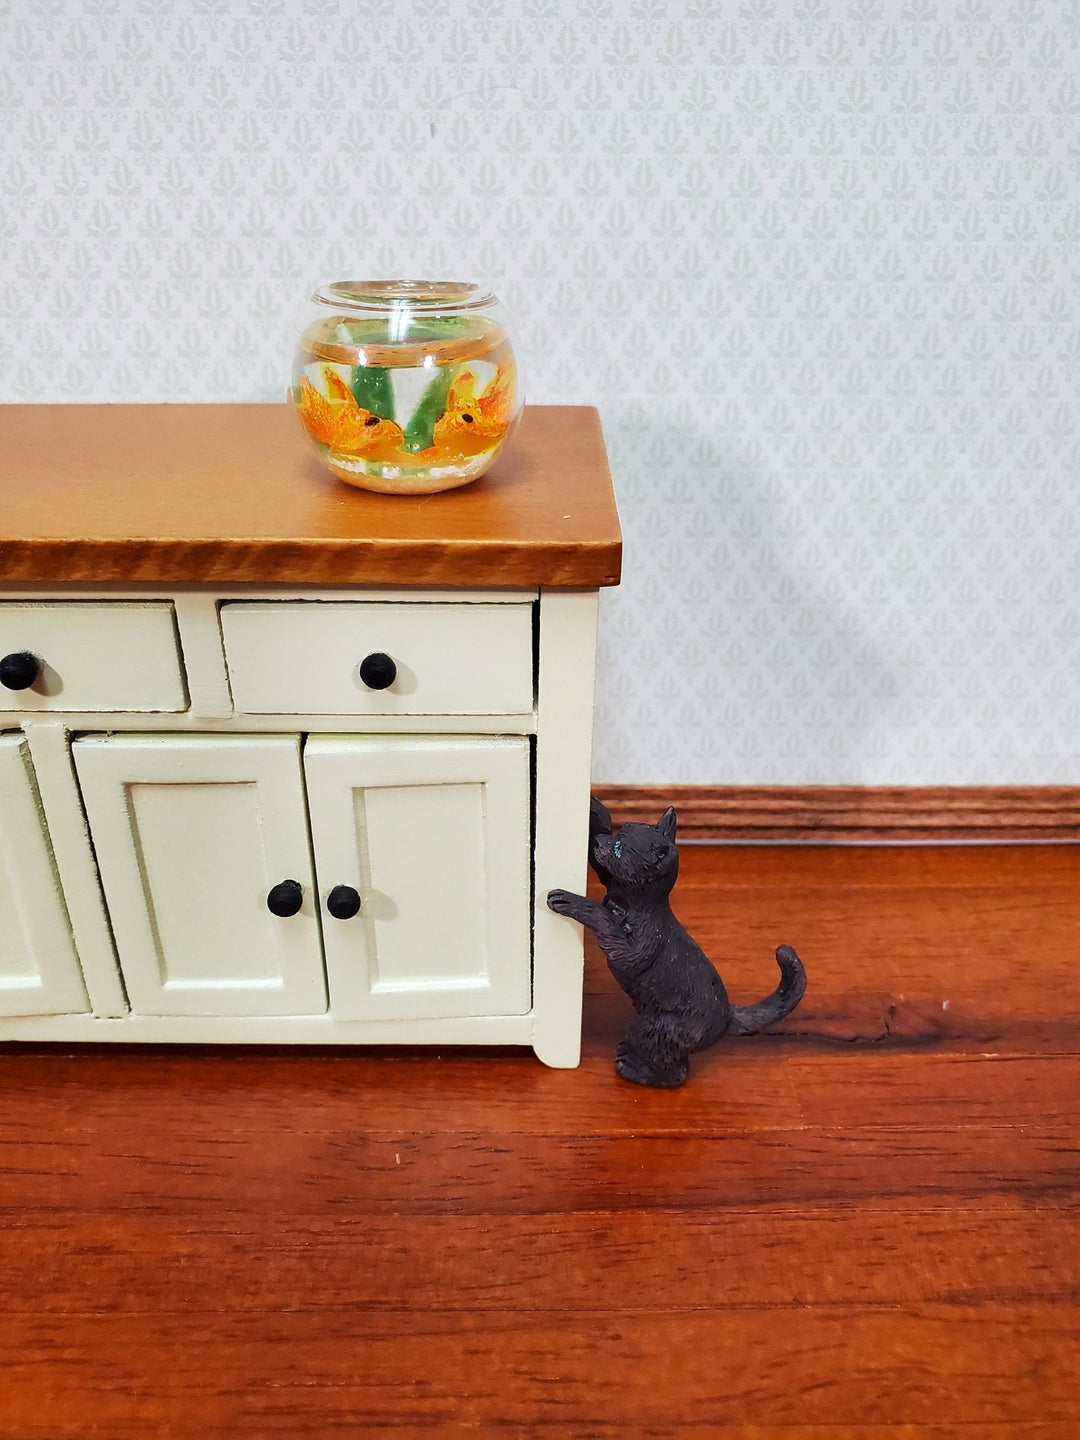 Dollhouse Kitty Cat Dark Brown Playful Reaching 1:12 Scale Miniature Pet - Miniature Crush